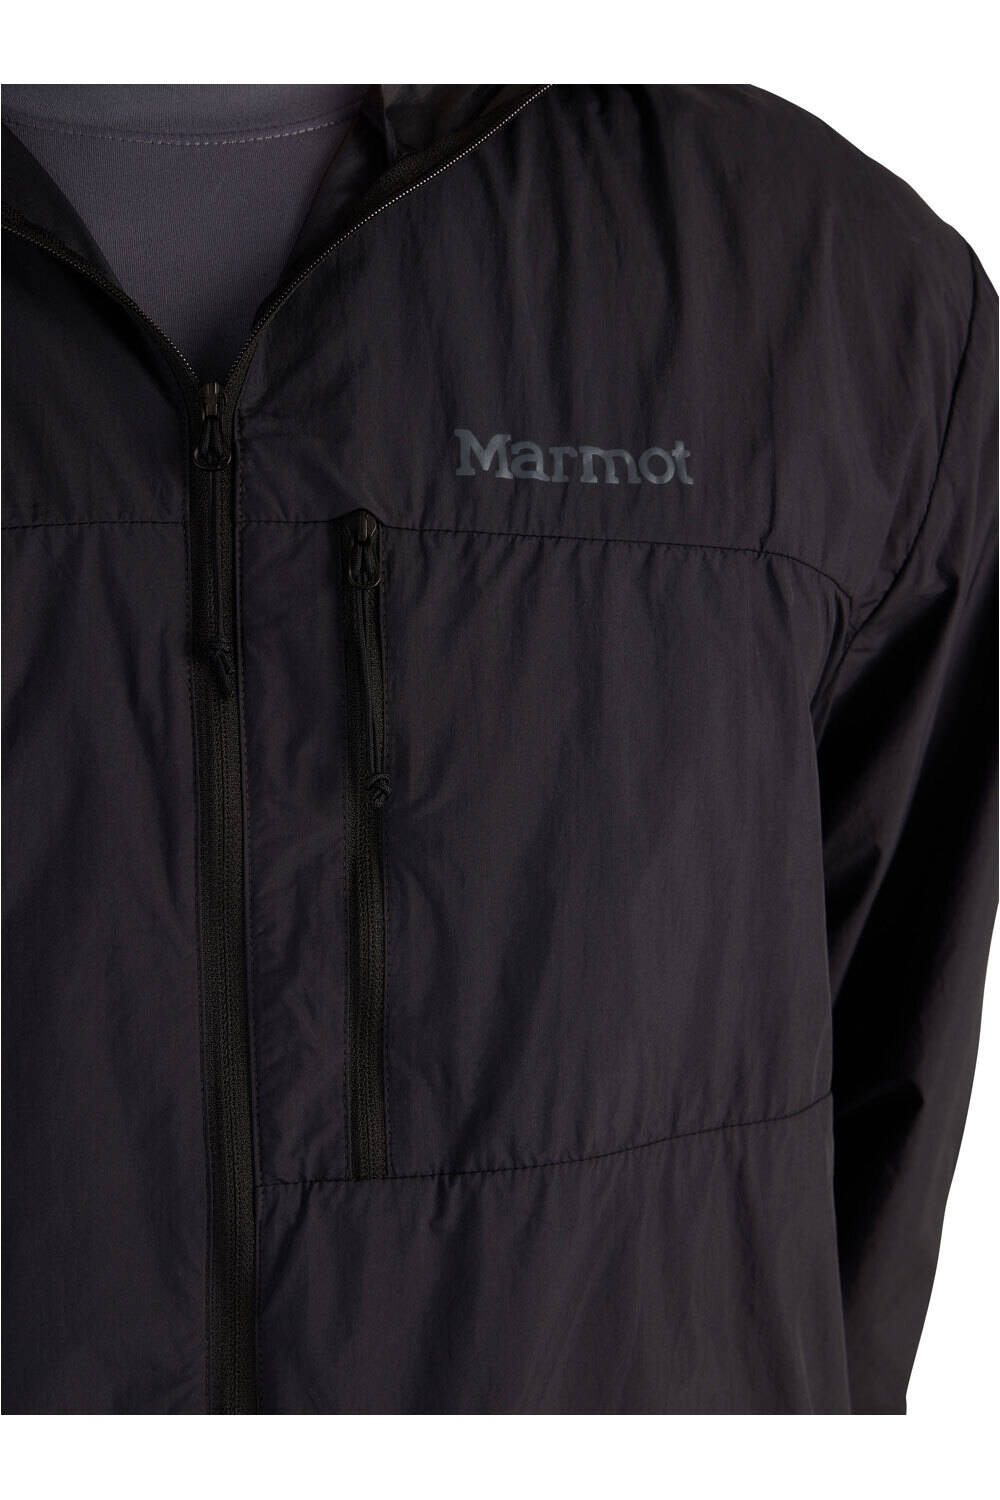 Marmot chaqueta softshell hombre Superalloy Bio Wind Jacket 03